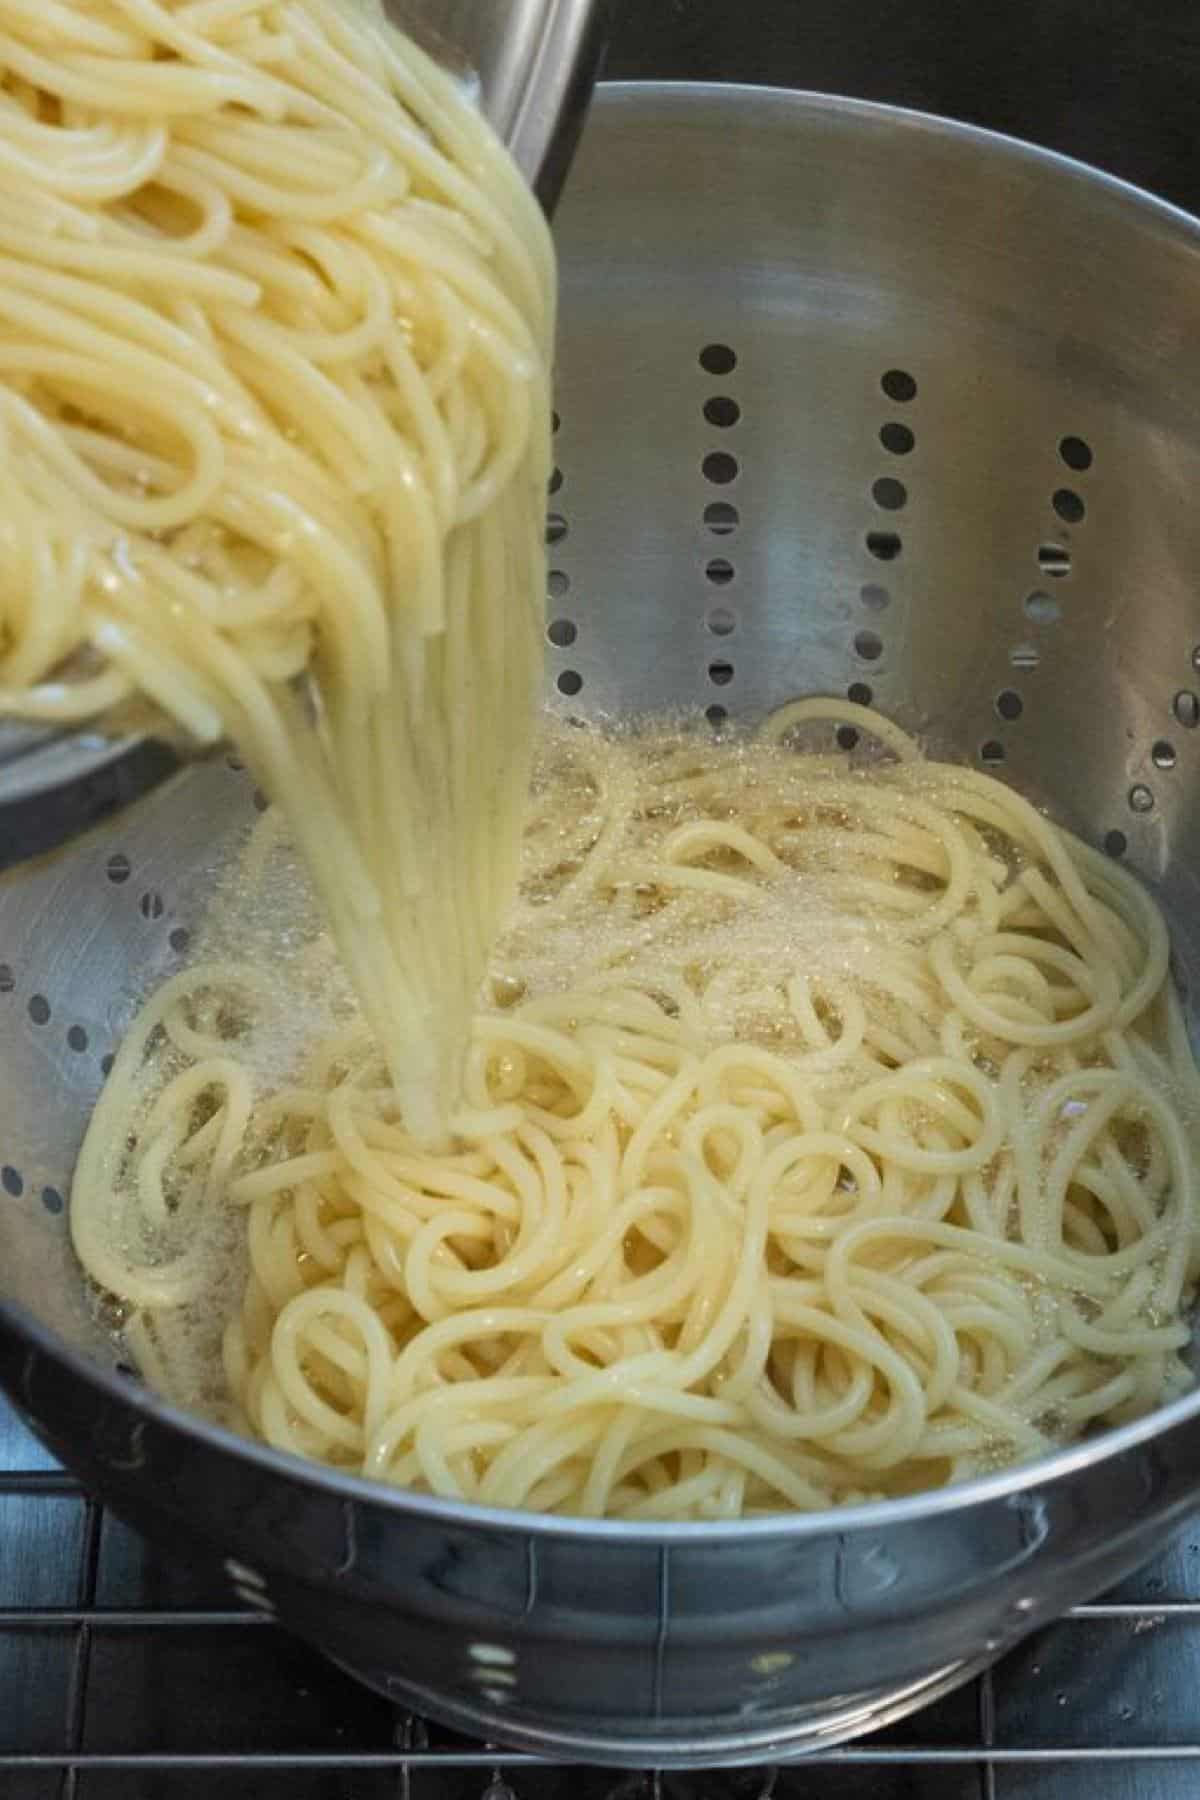 https://www.shelovesbiscotti.com/wp-content/uploads/2021/03/how-to-cook-pasta-2.jpg